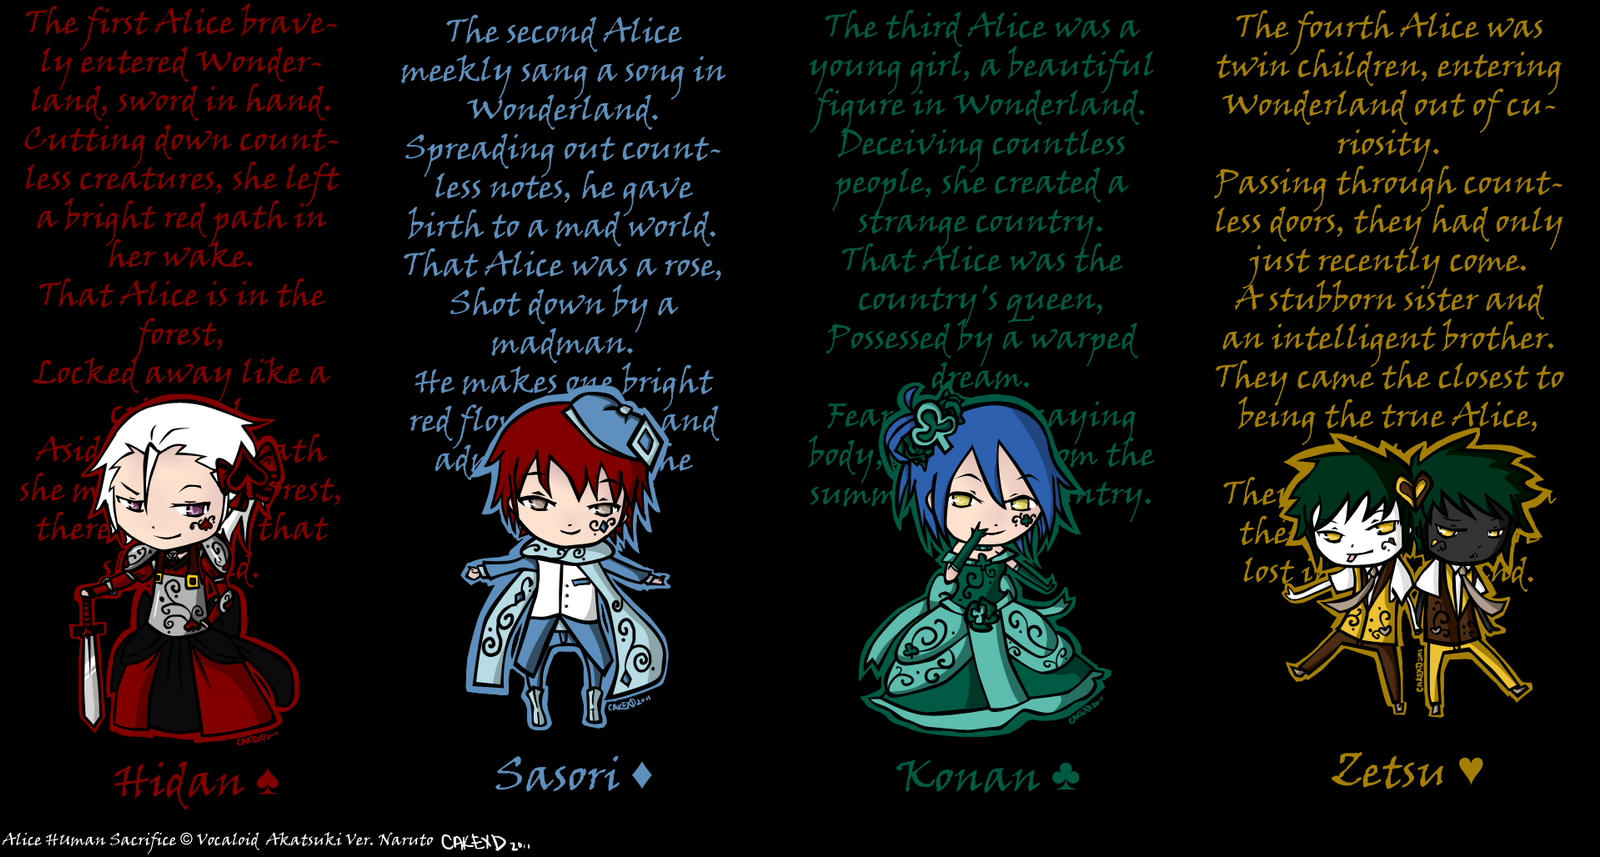 AI Art: Alice human sacrifice lyrics - first Alice by @Mercury